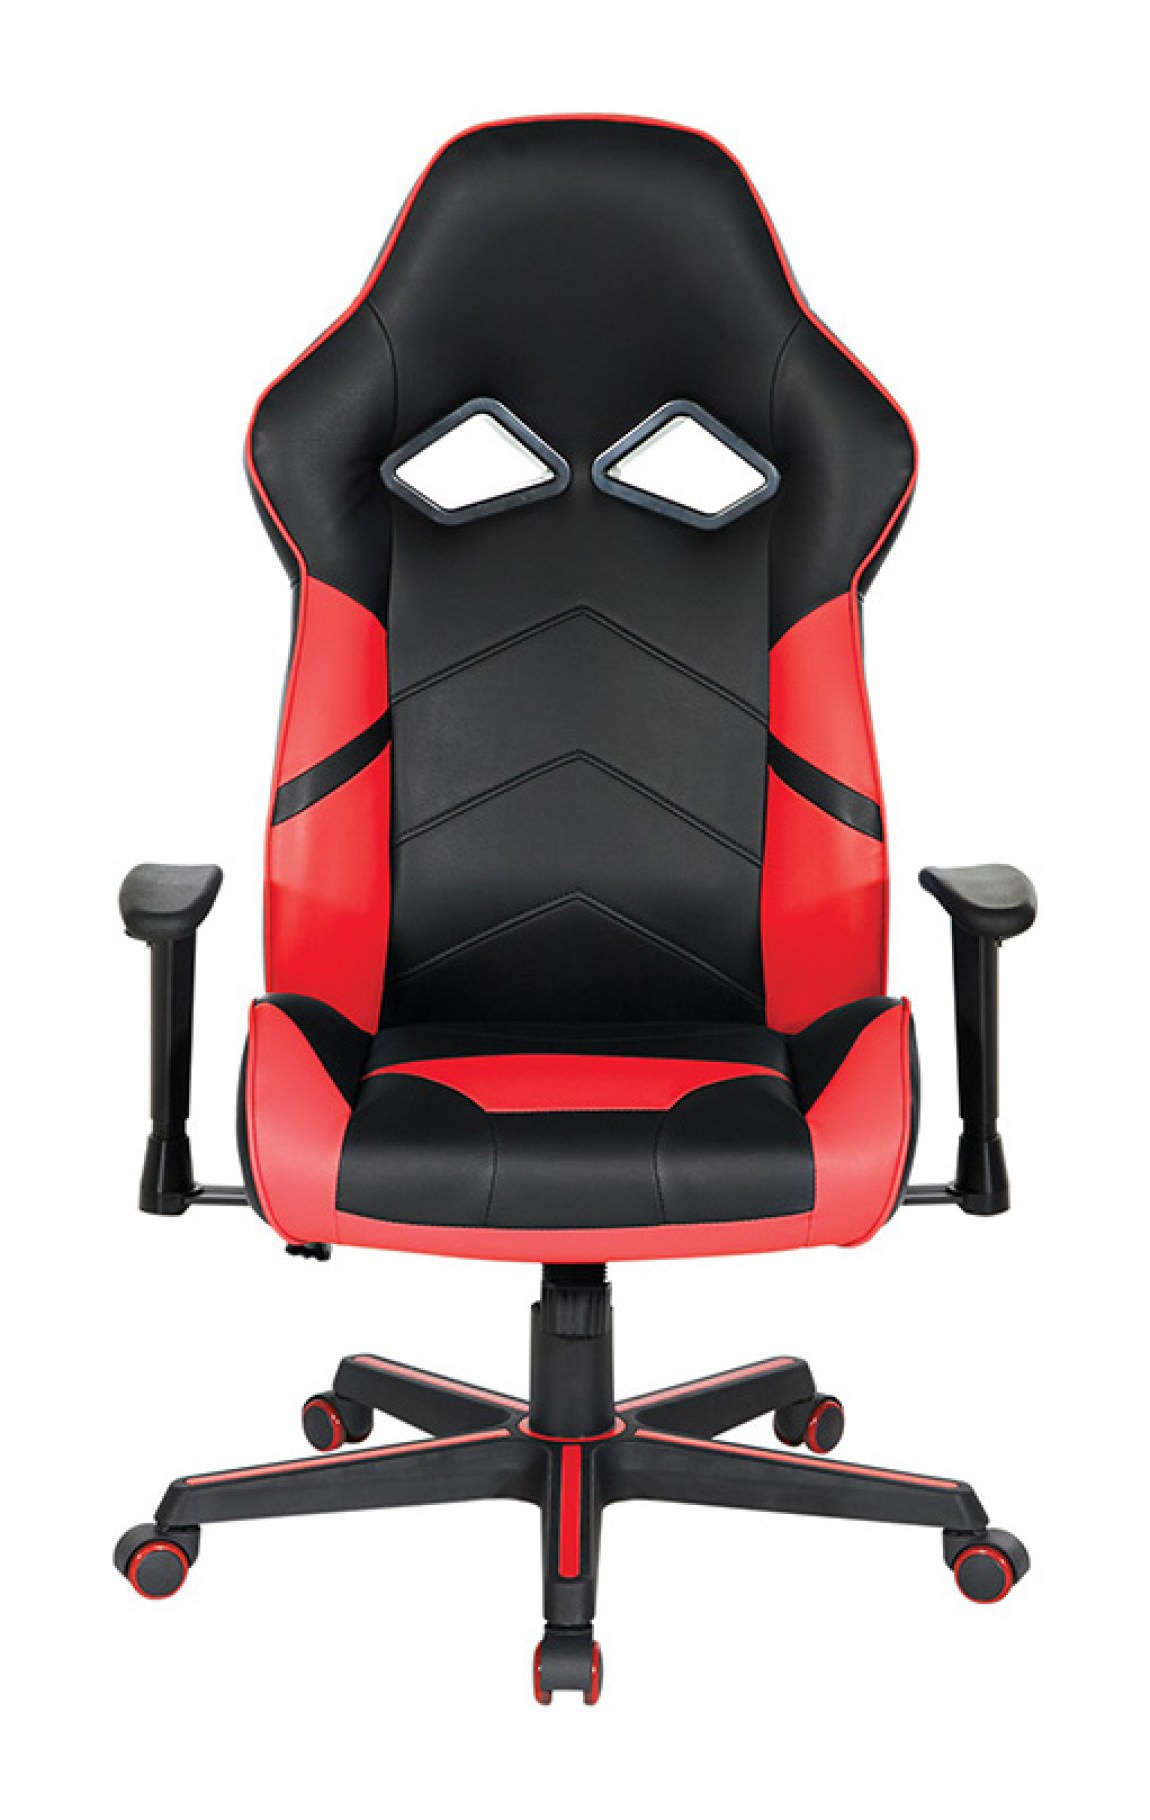 Vapor High Back Gaming Chair